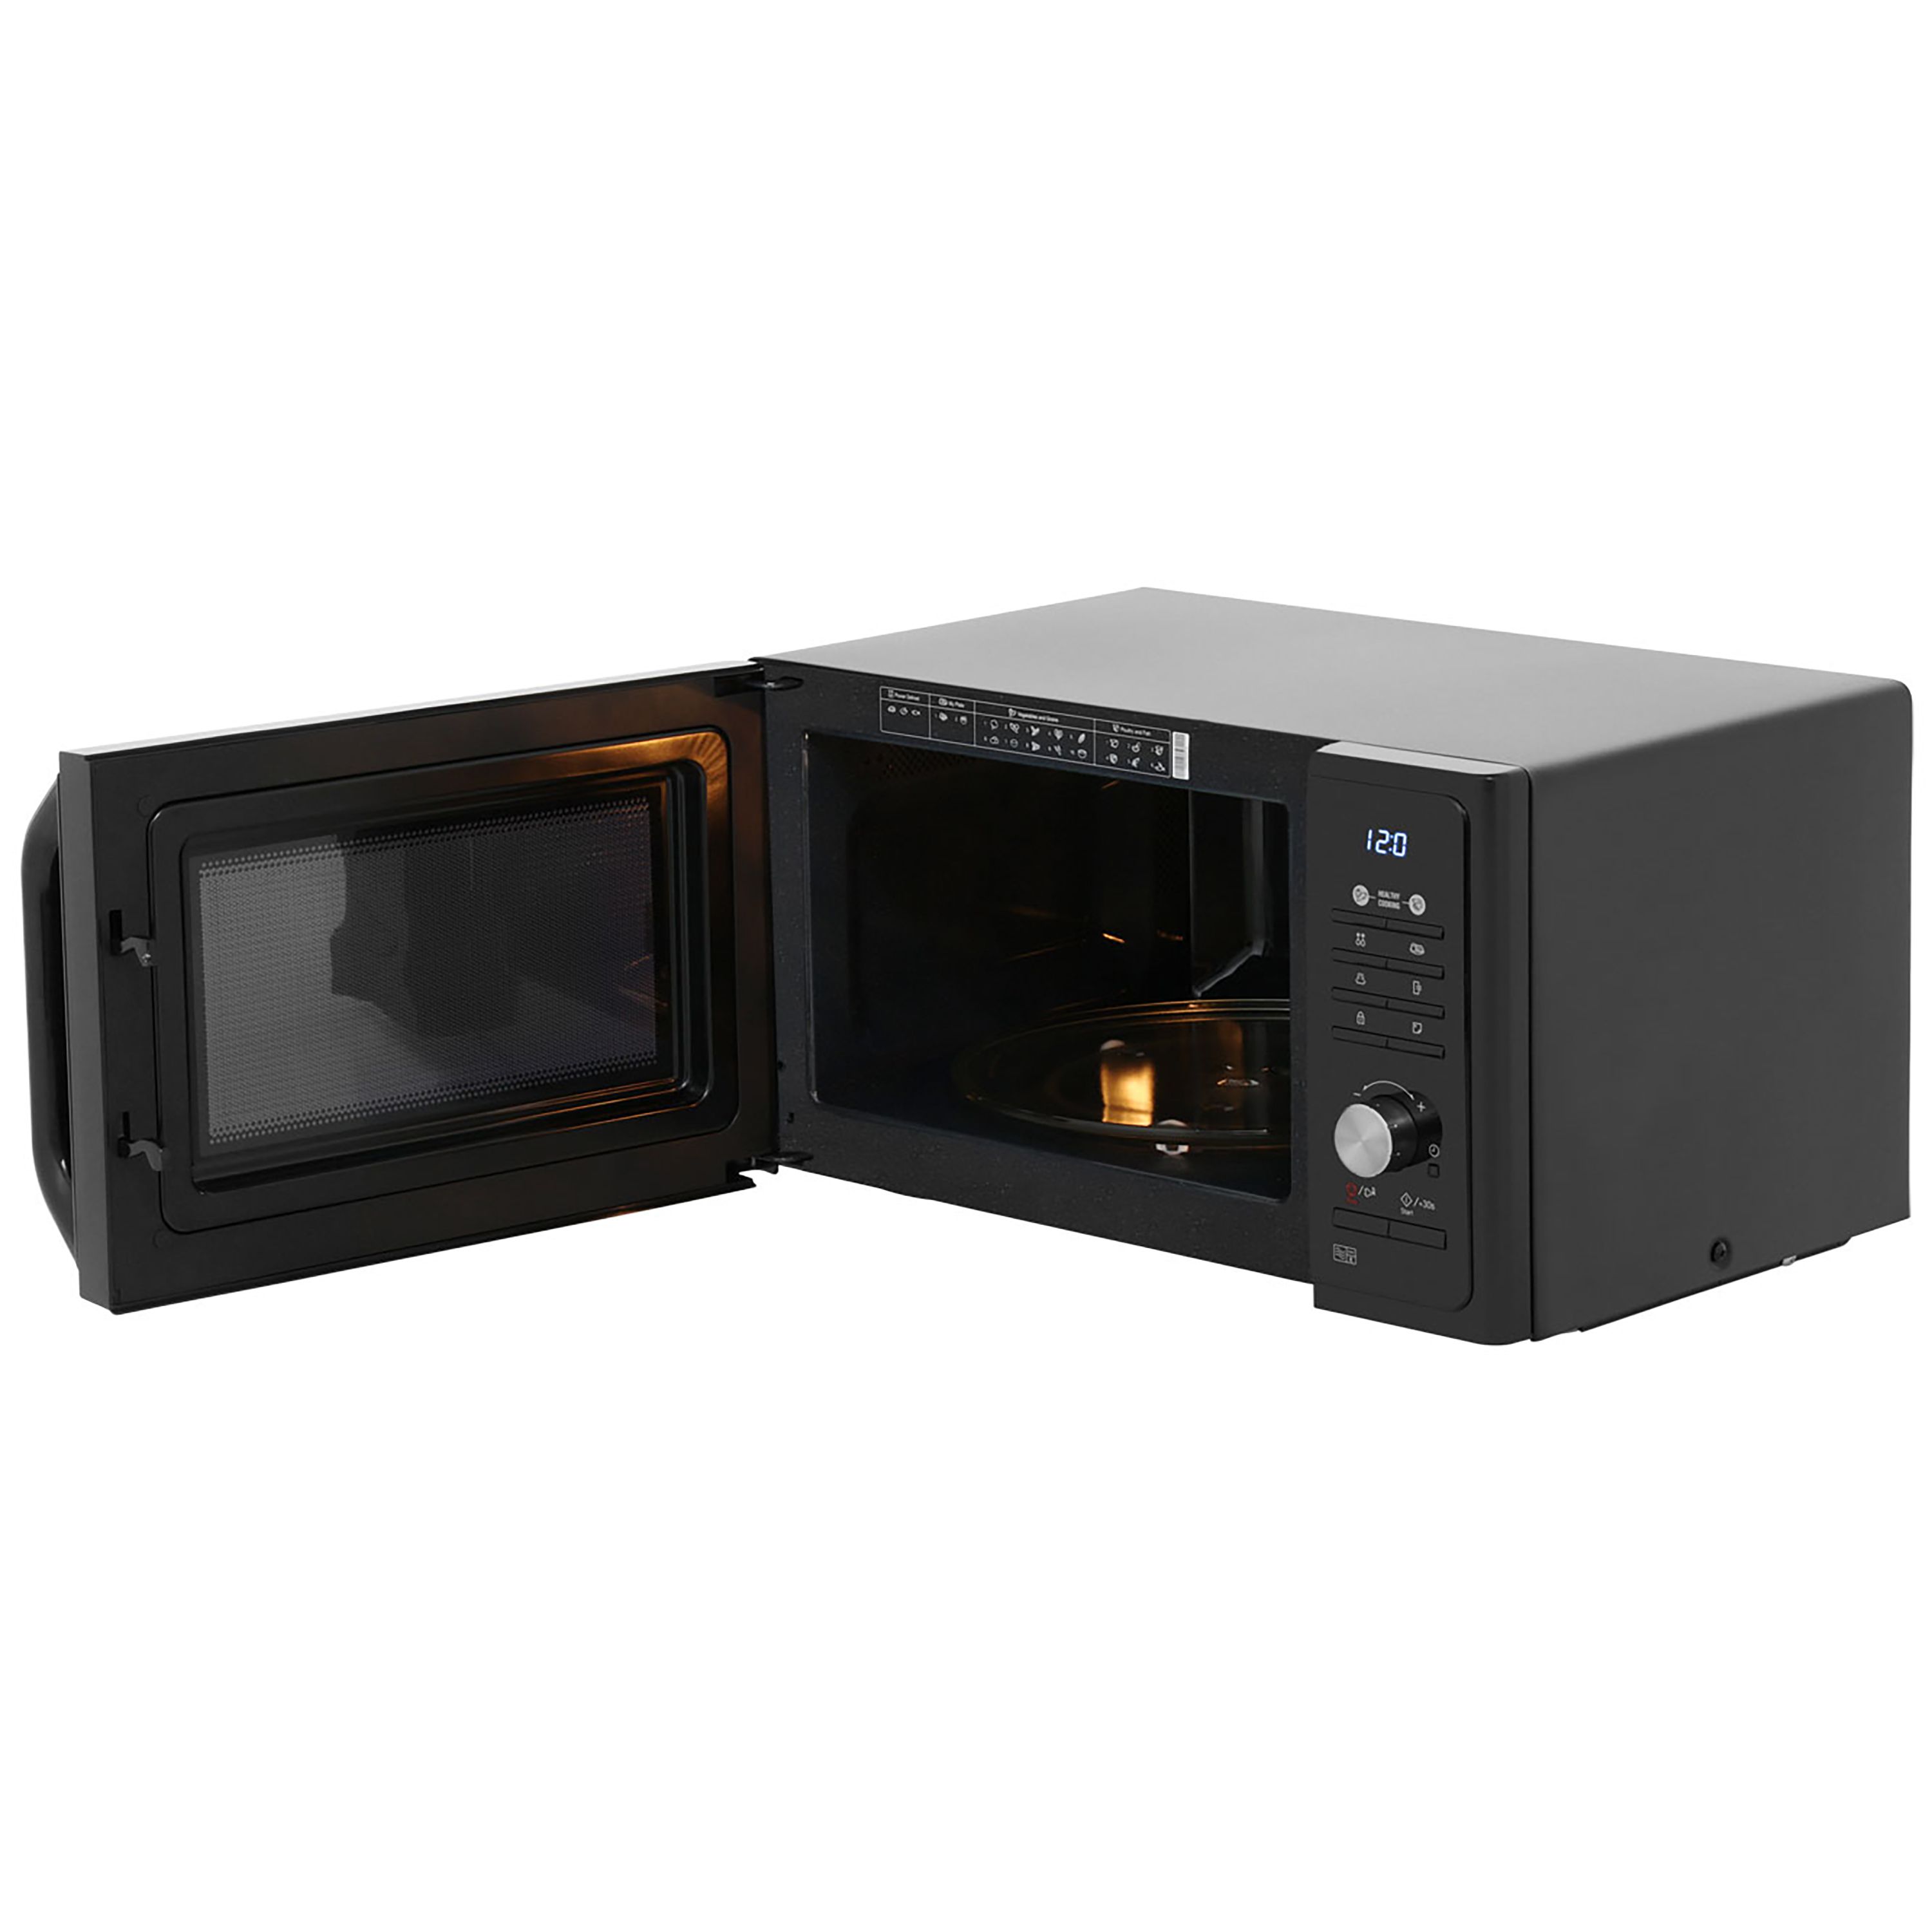 Samsung MS23F301TAK_BK 23L Freestanding Microwave - Black